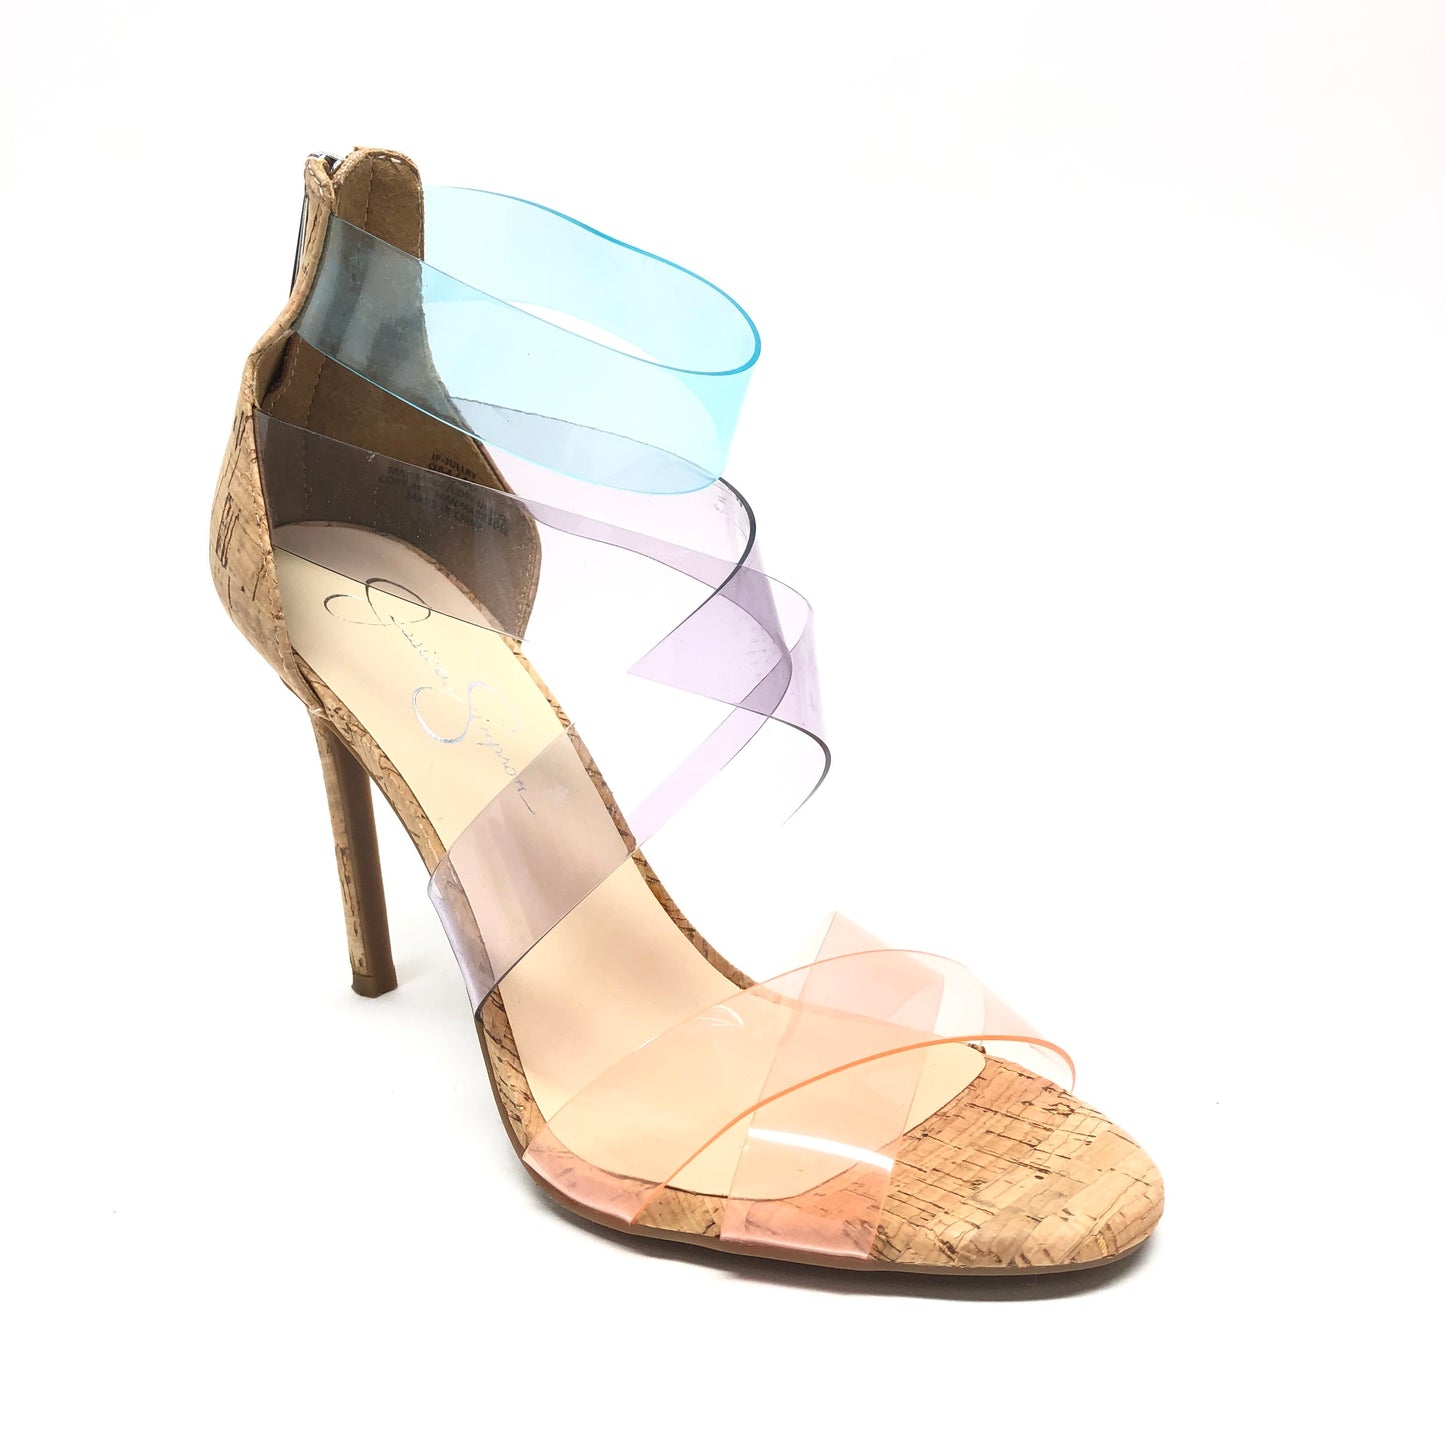 Multi-colored Shoes Heels Stiletto Jessica Simpson, Size 9